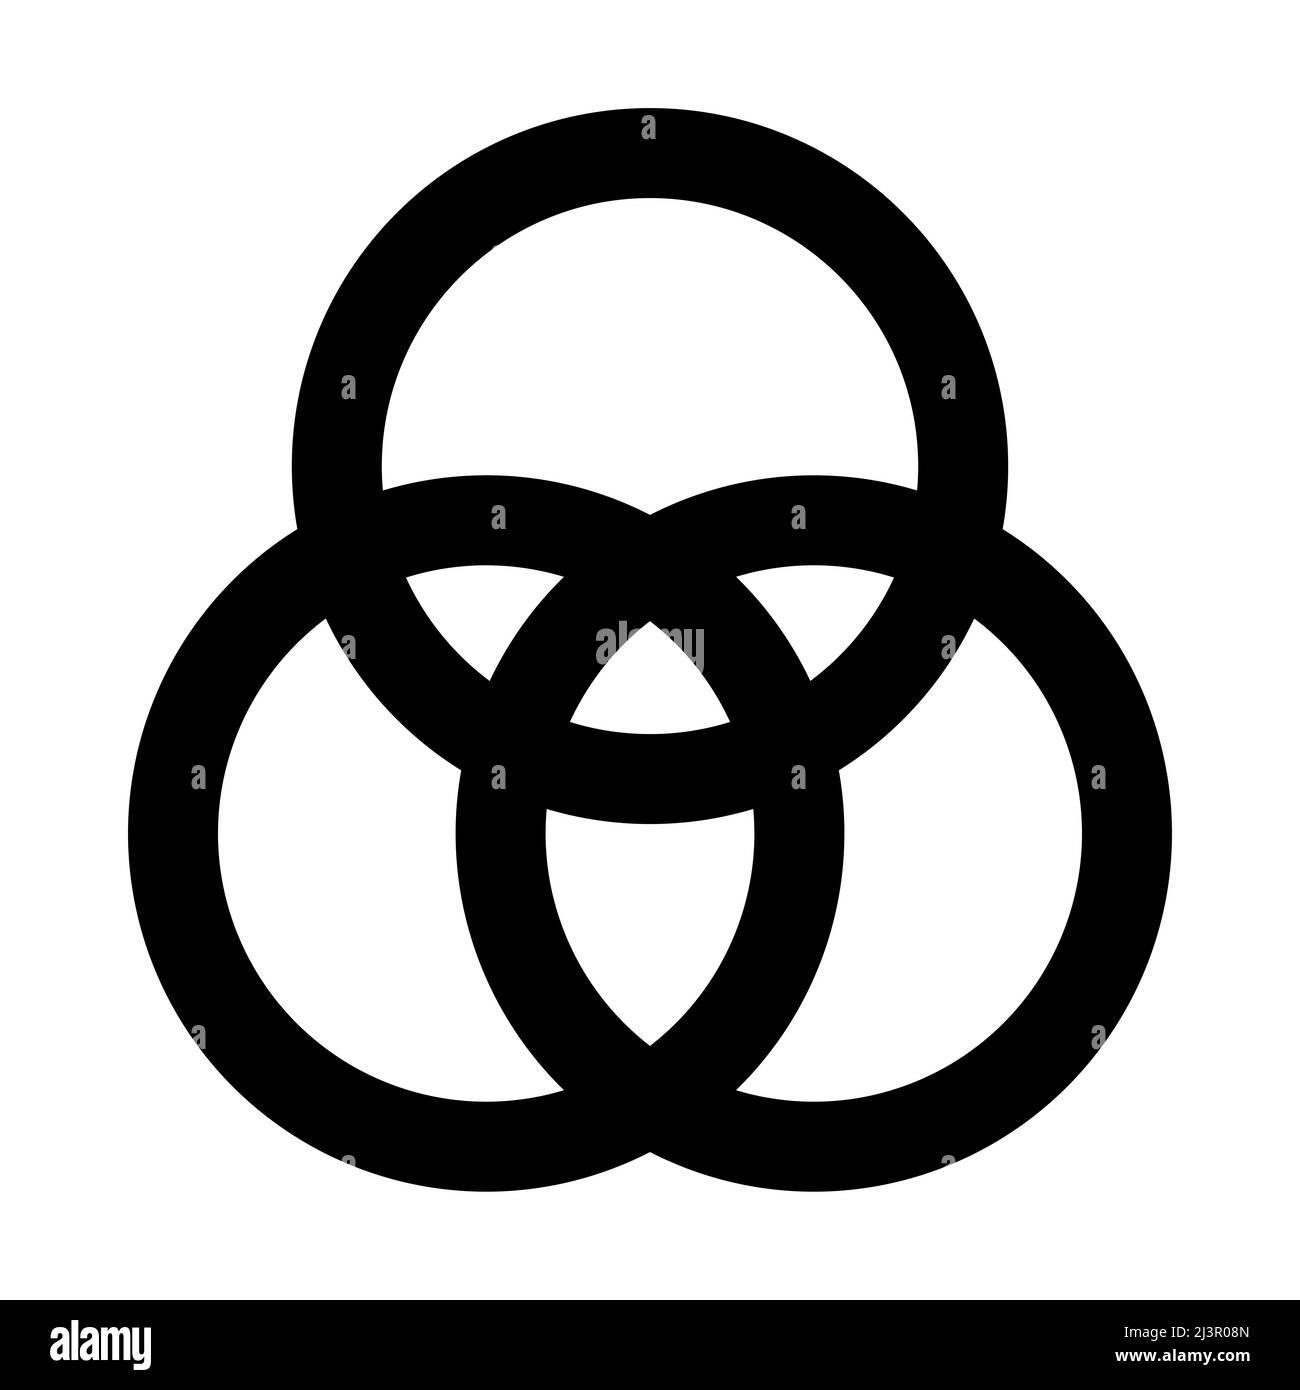 Borromean rings symbol icon illustration Stock Photo